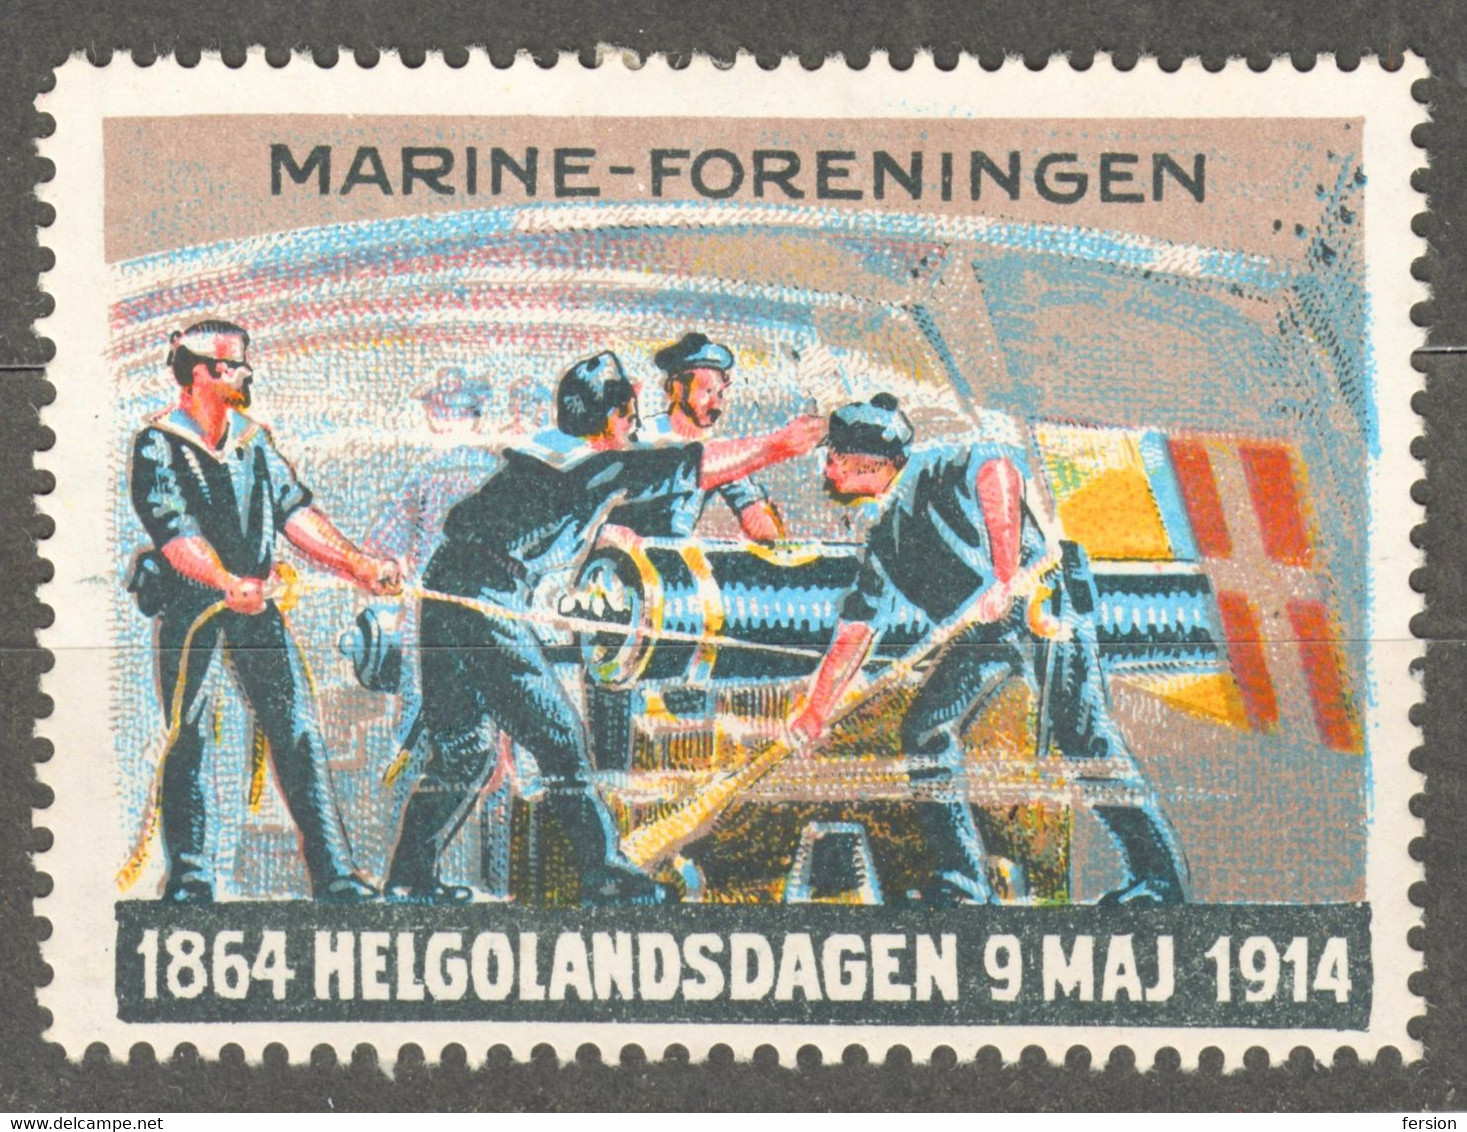 MILITARY NAVY MARINE Battle Helgoland Cannon FLAG Denmark 1914 CINDERELLA LABEL VIGNETTE Andreasen Lachmann - Unused Stamps